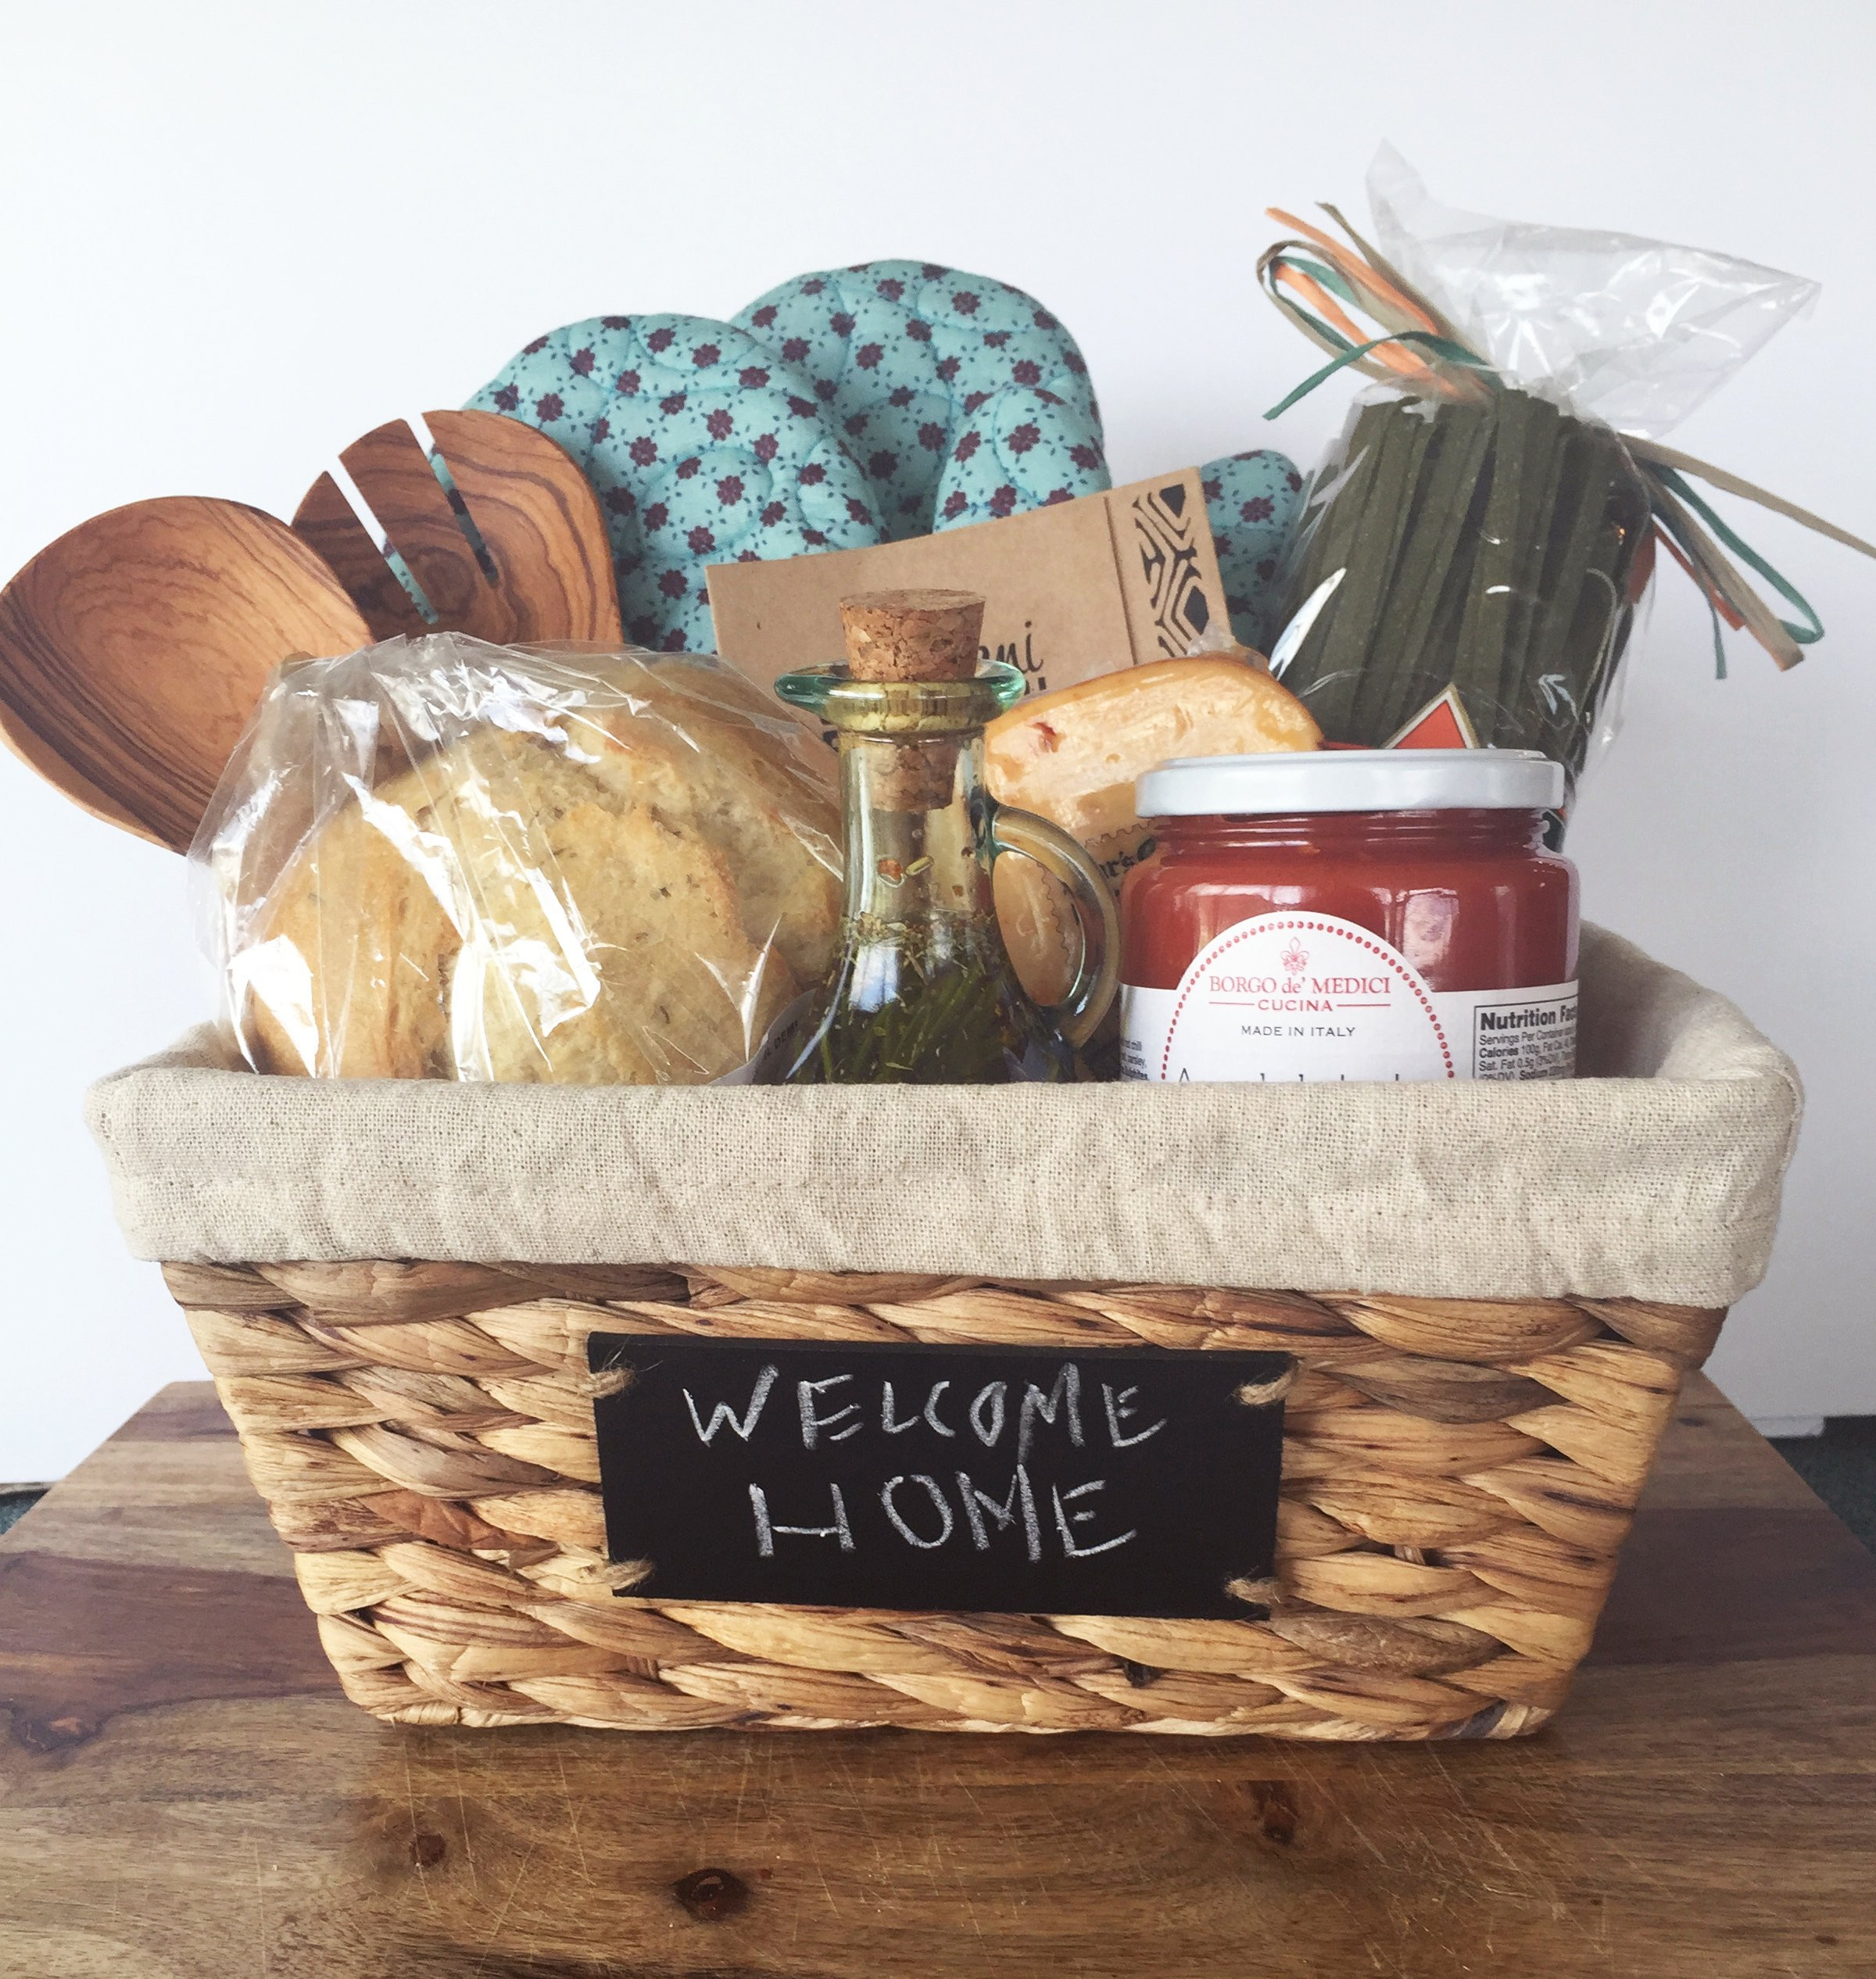 New Home Gift Basket Ideas
 DIY HOUSEWARMING GIFT BASKET T A S T Y S O U T H E R N C H I C